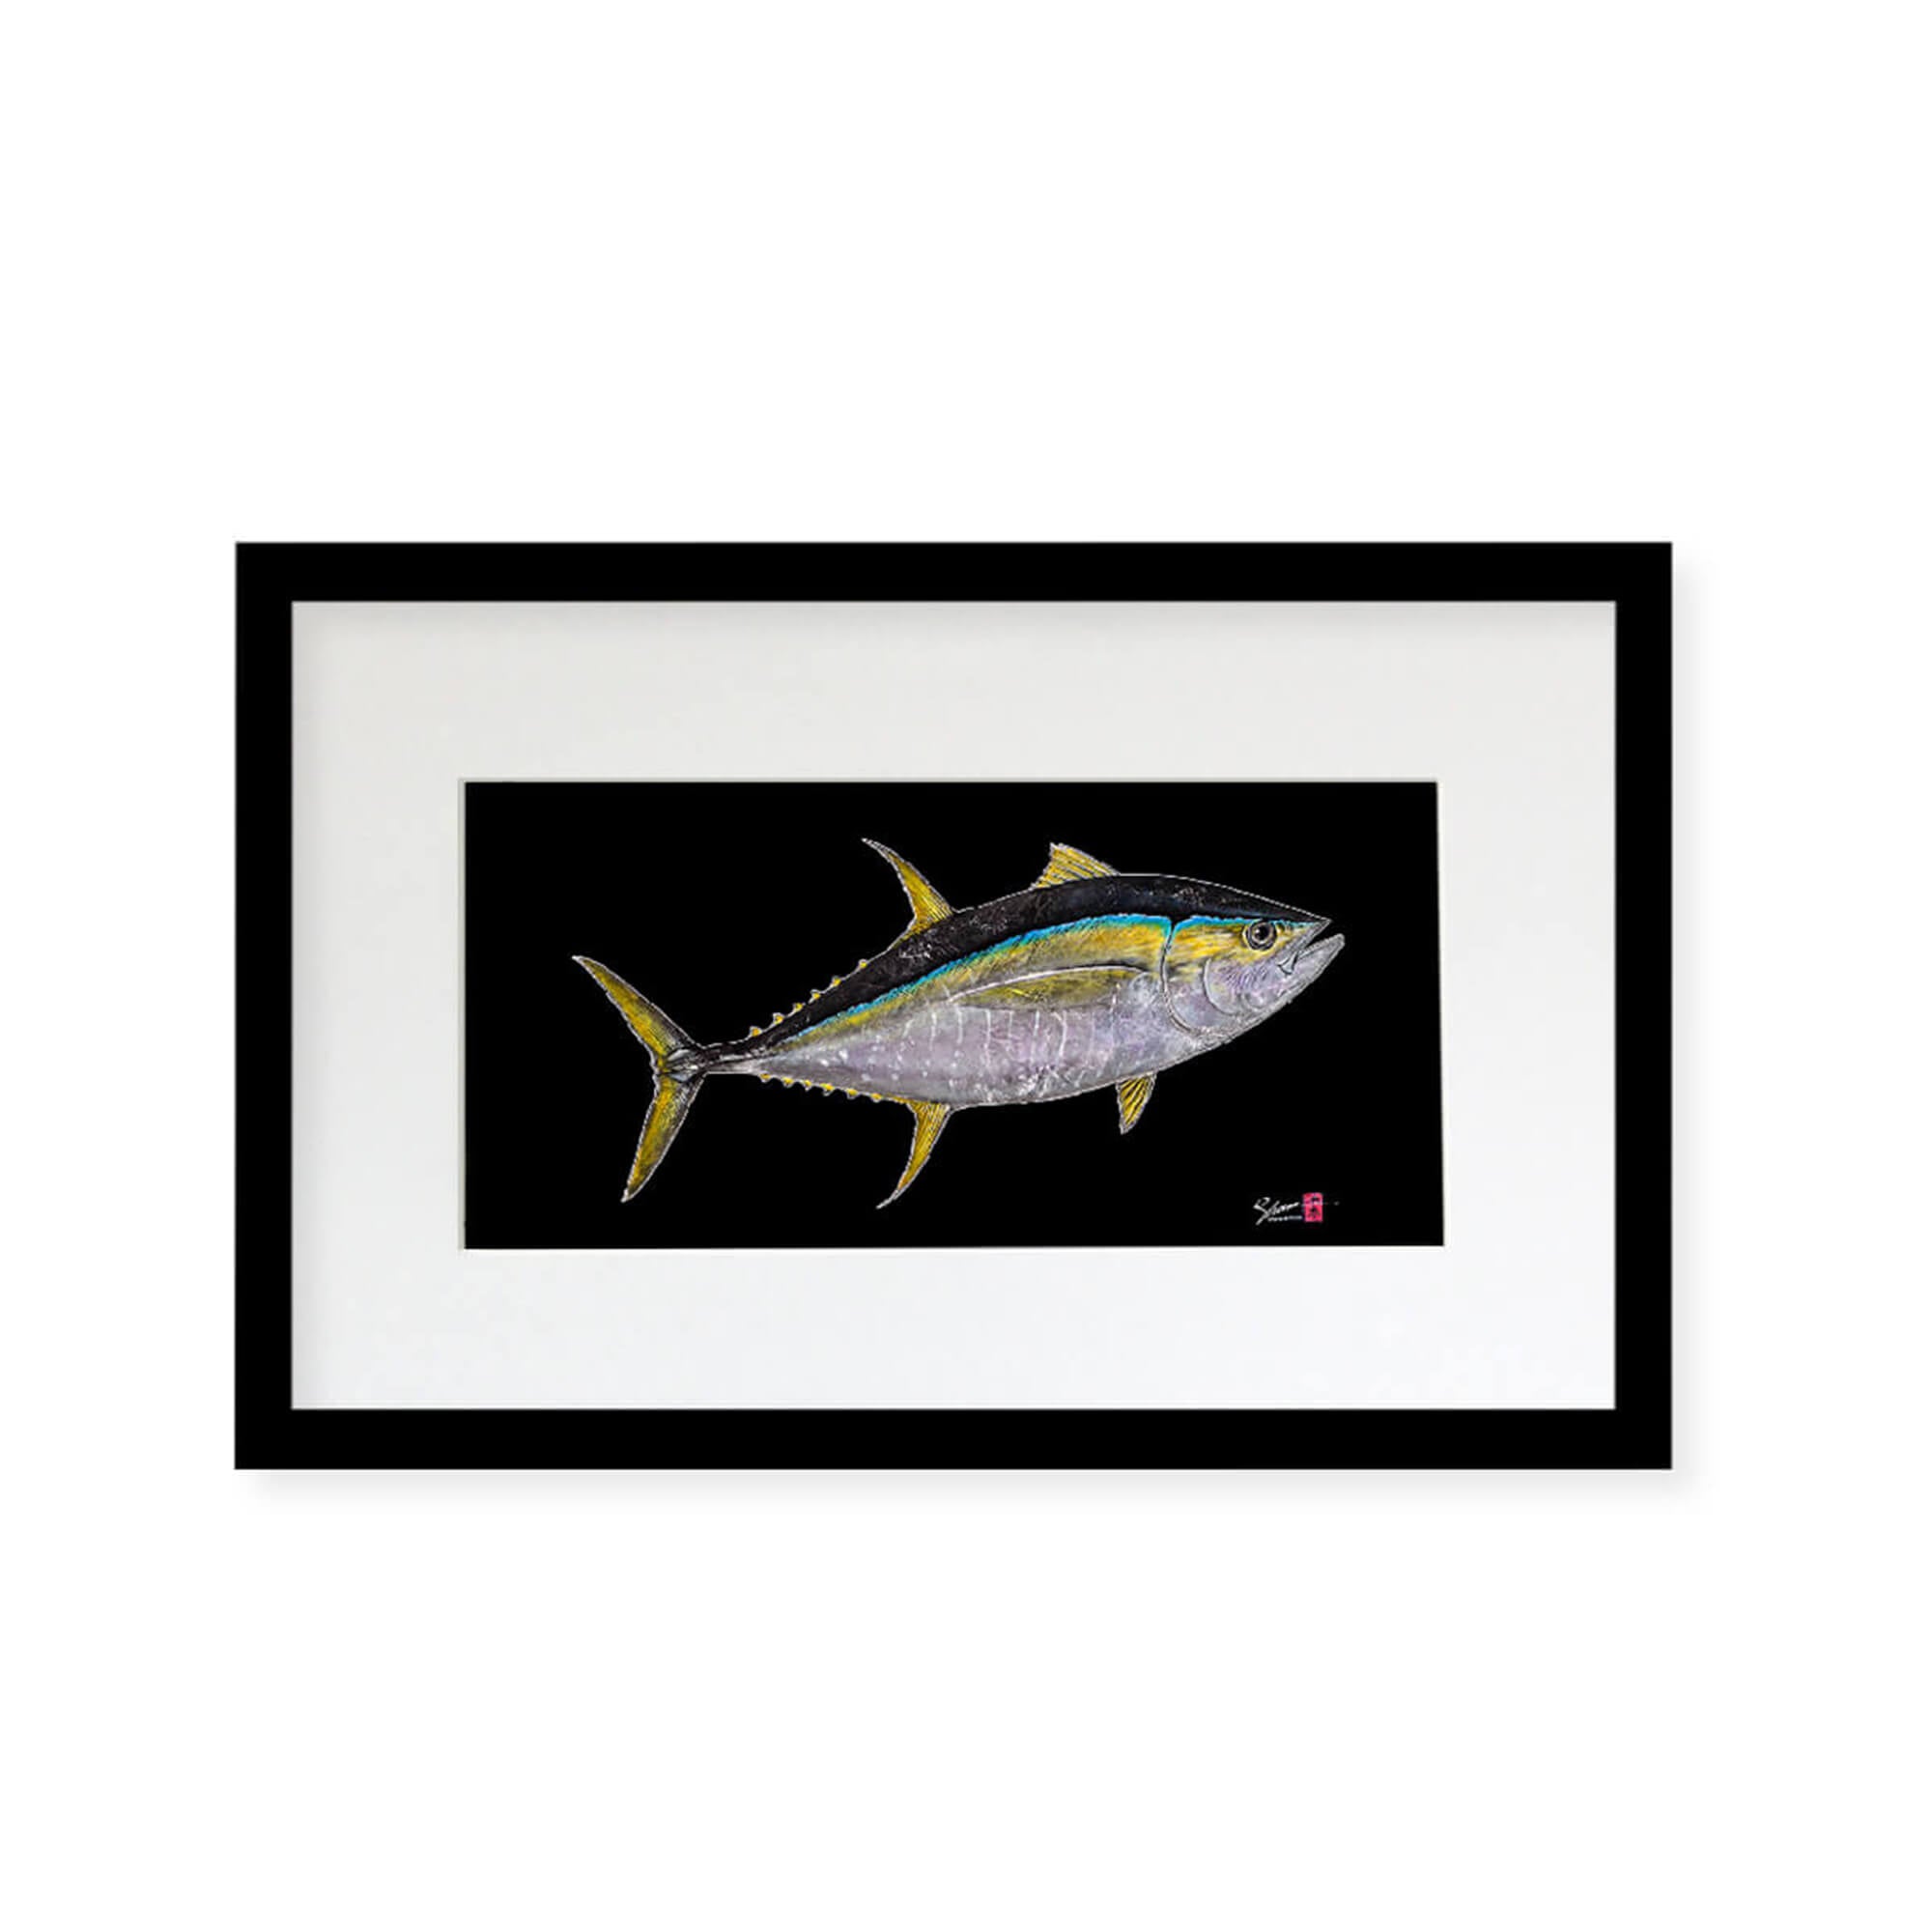 Framed matted print of Shibi (also known as Yellowfin Tuna) by Hawaii gyotaku artist Shane Hamoto